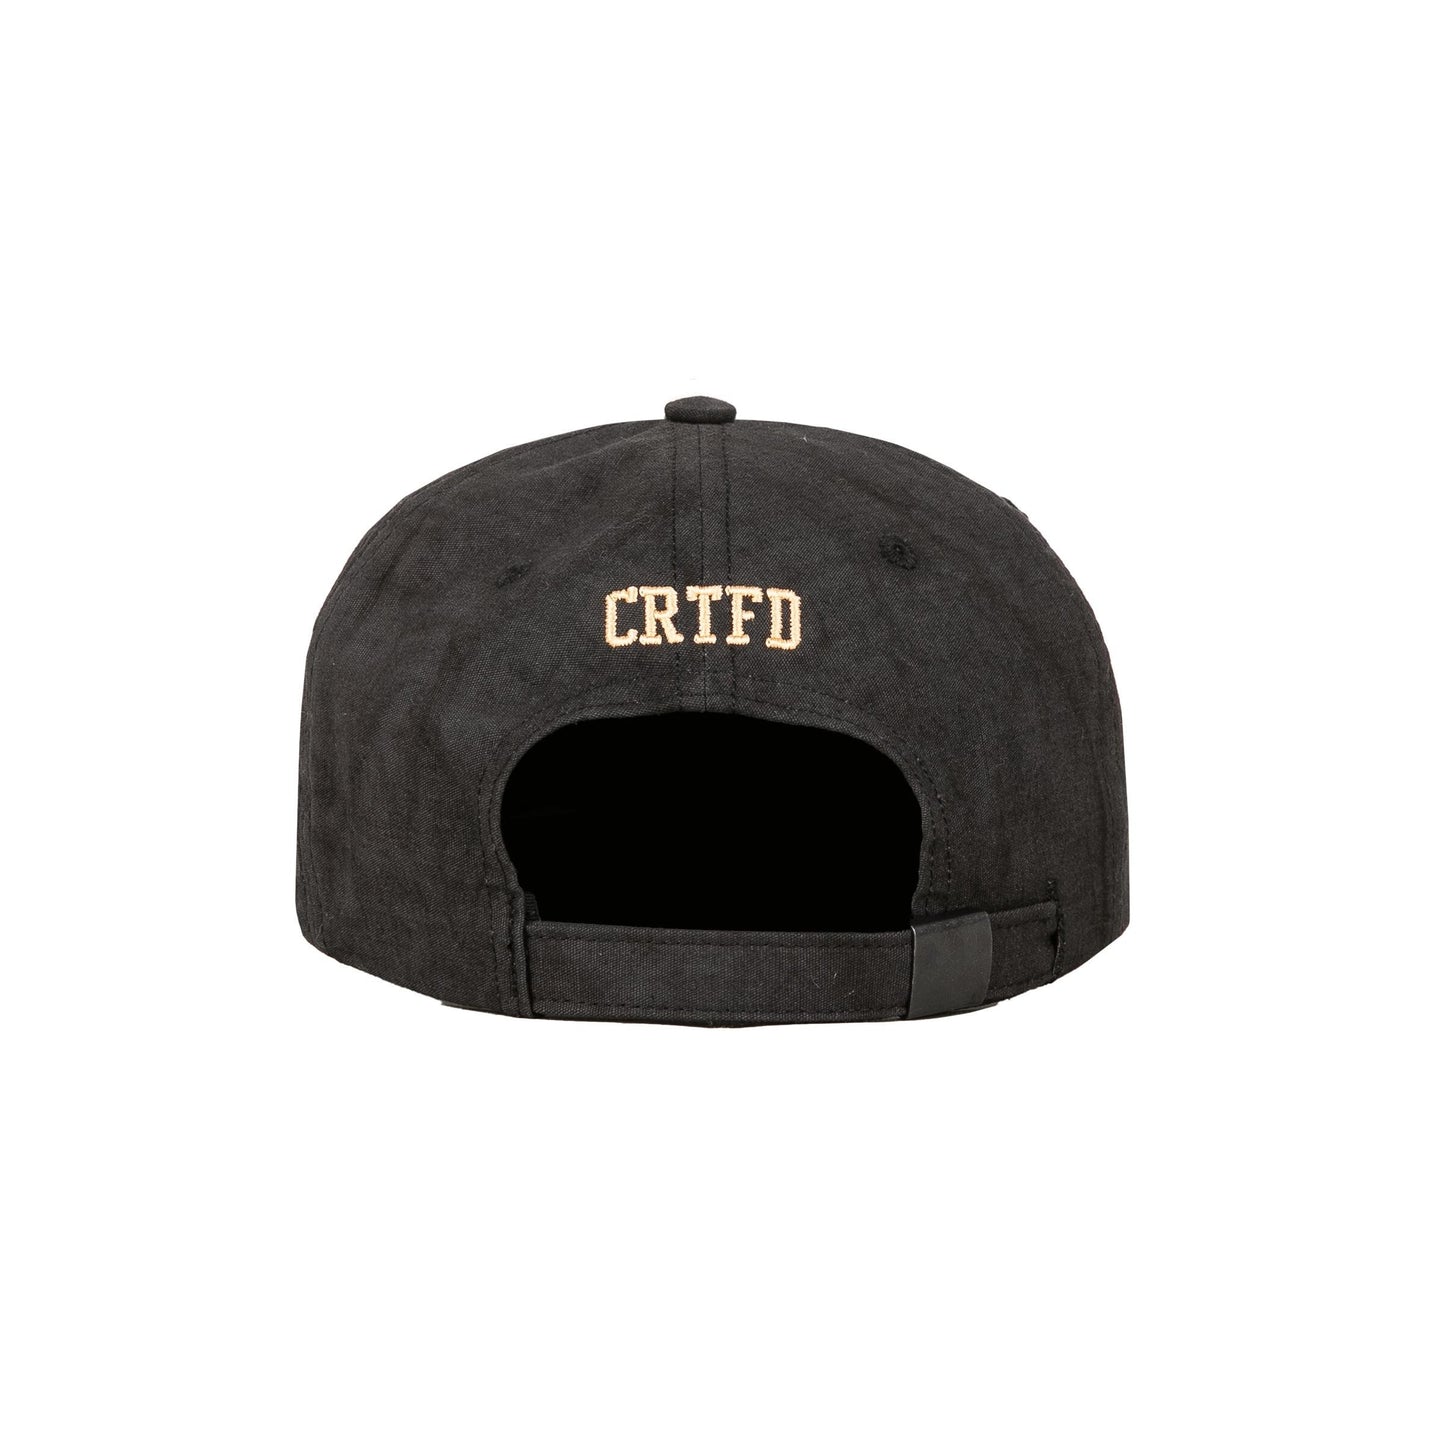 Certified University Cap - Vintage Black